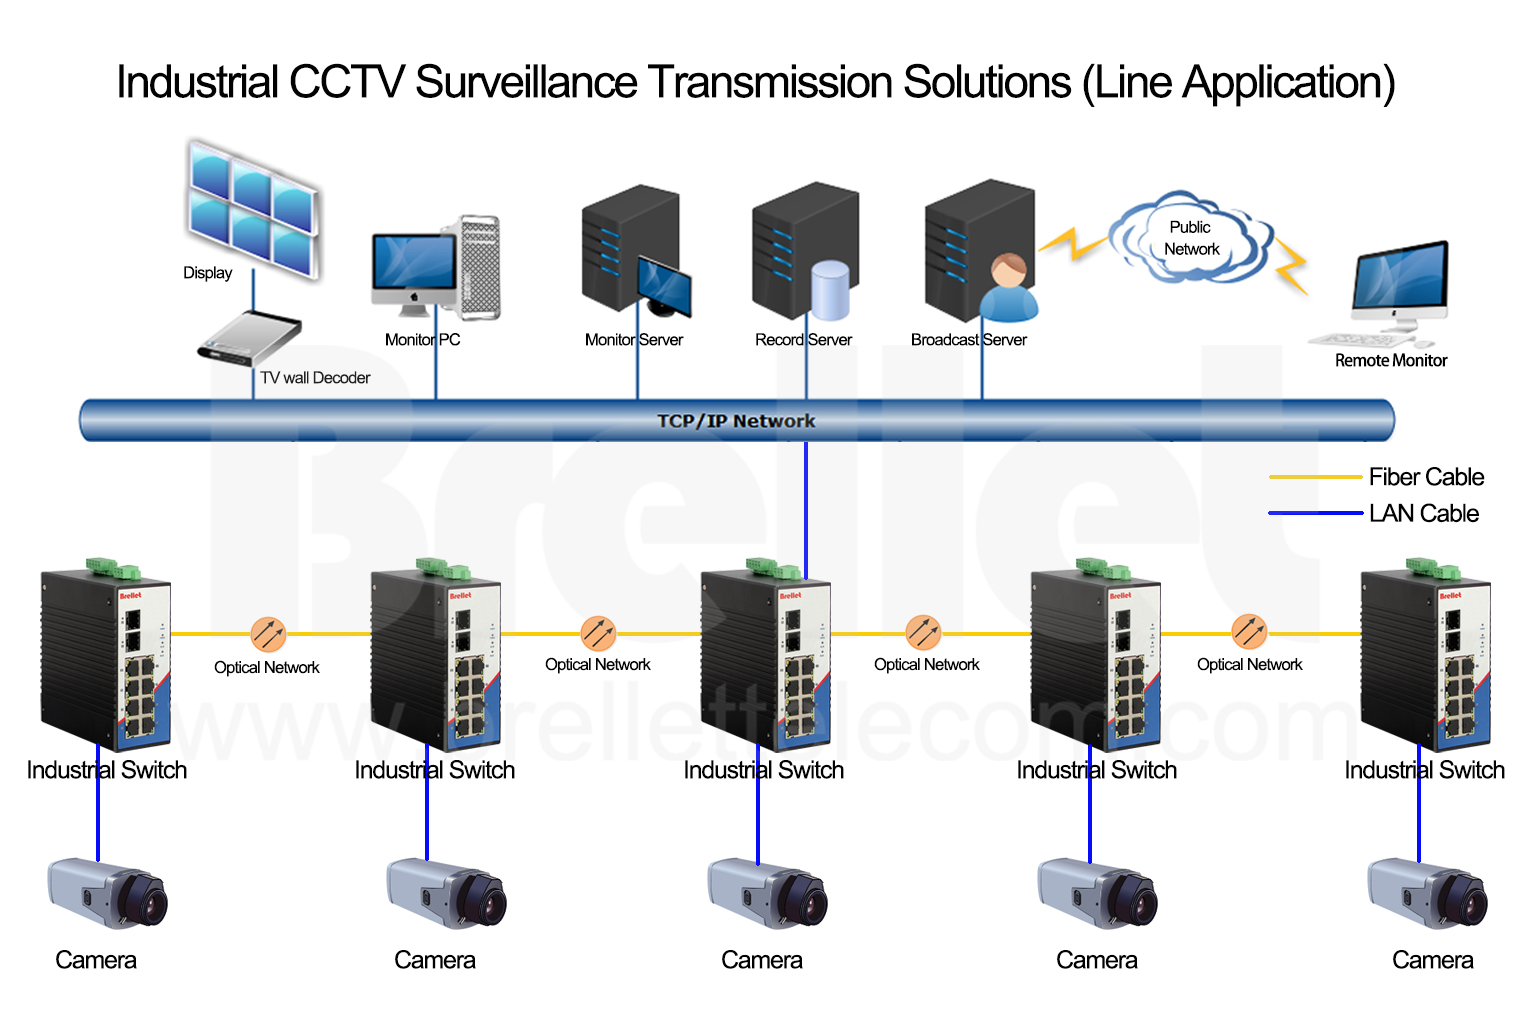 Industrial CCTV Surveillance Transmission Solutions